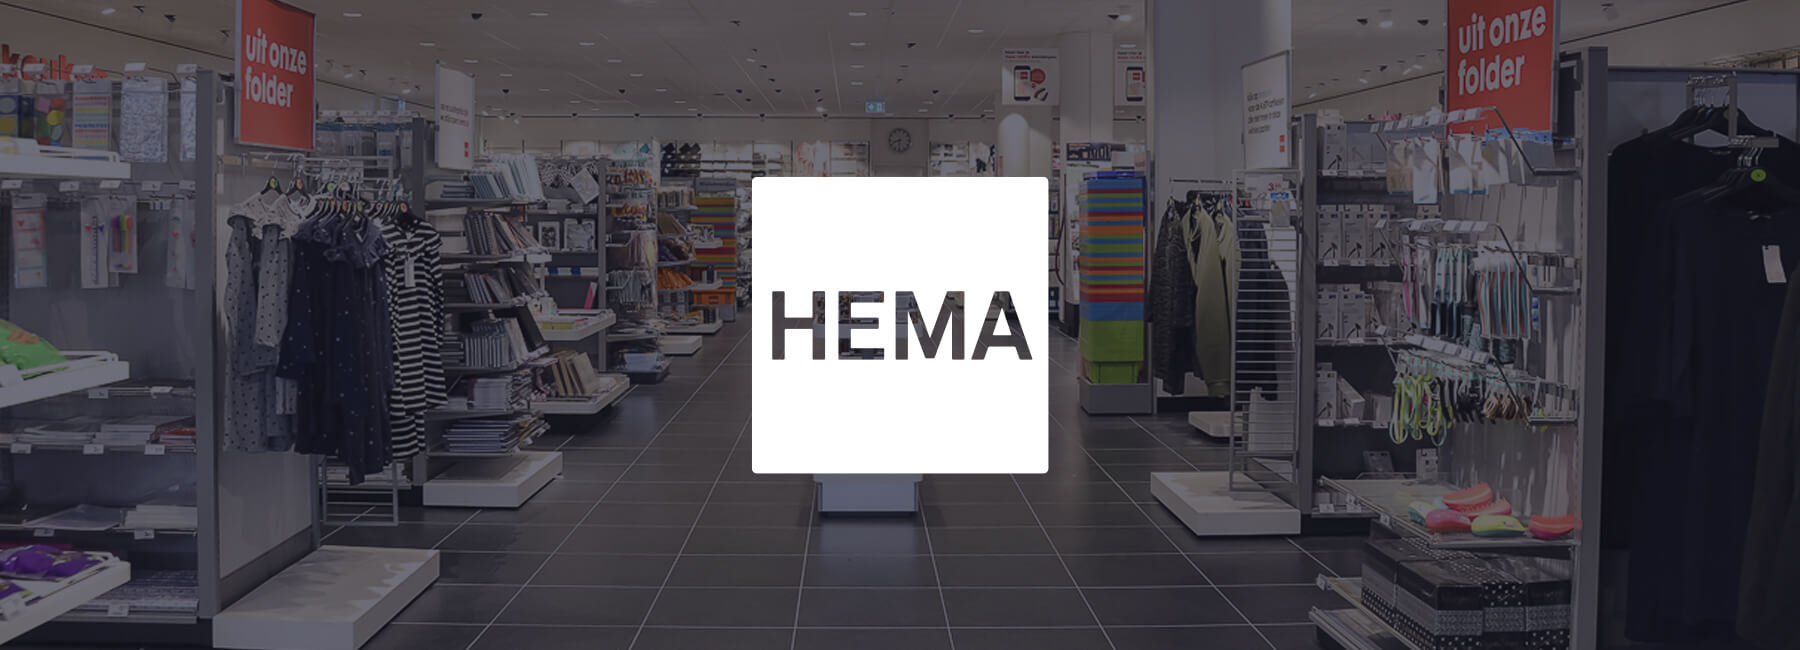 How HEMA uses customer feedback to measure performance